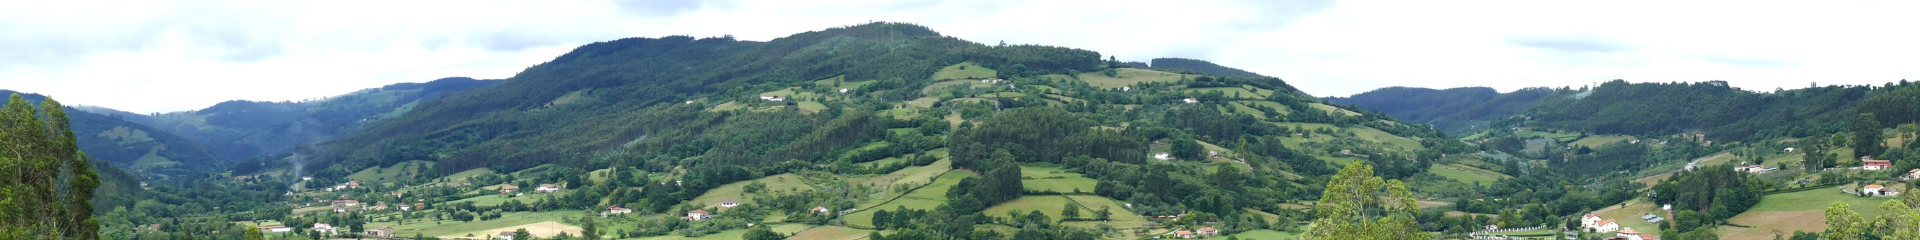 Living Lab Asturias Rural